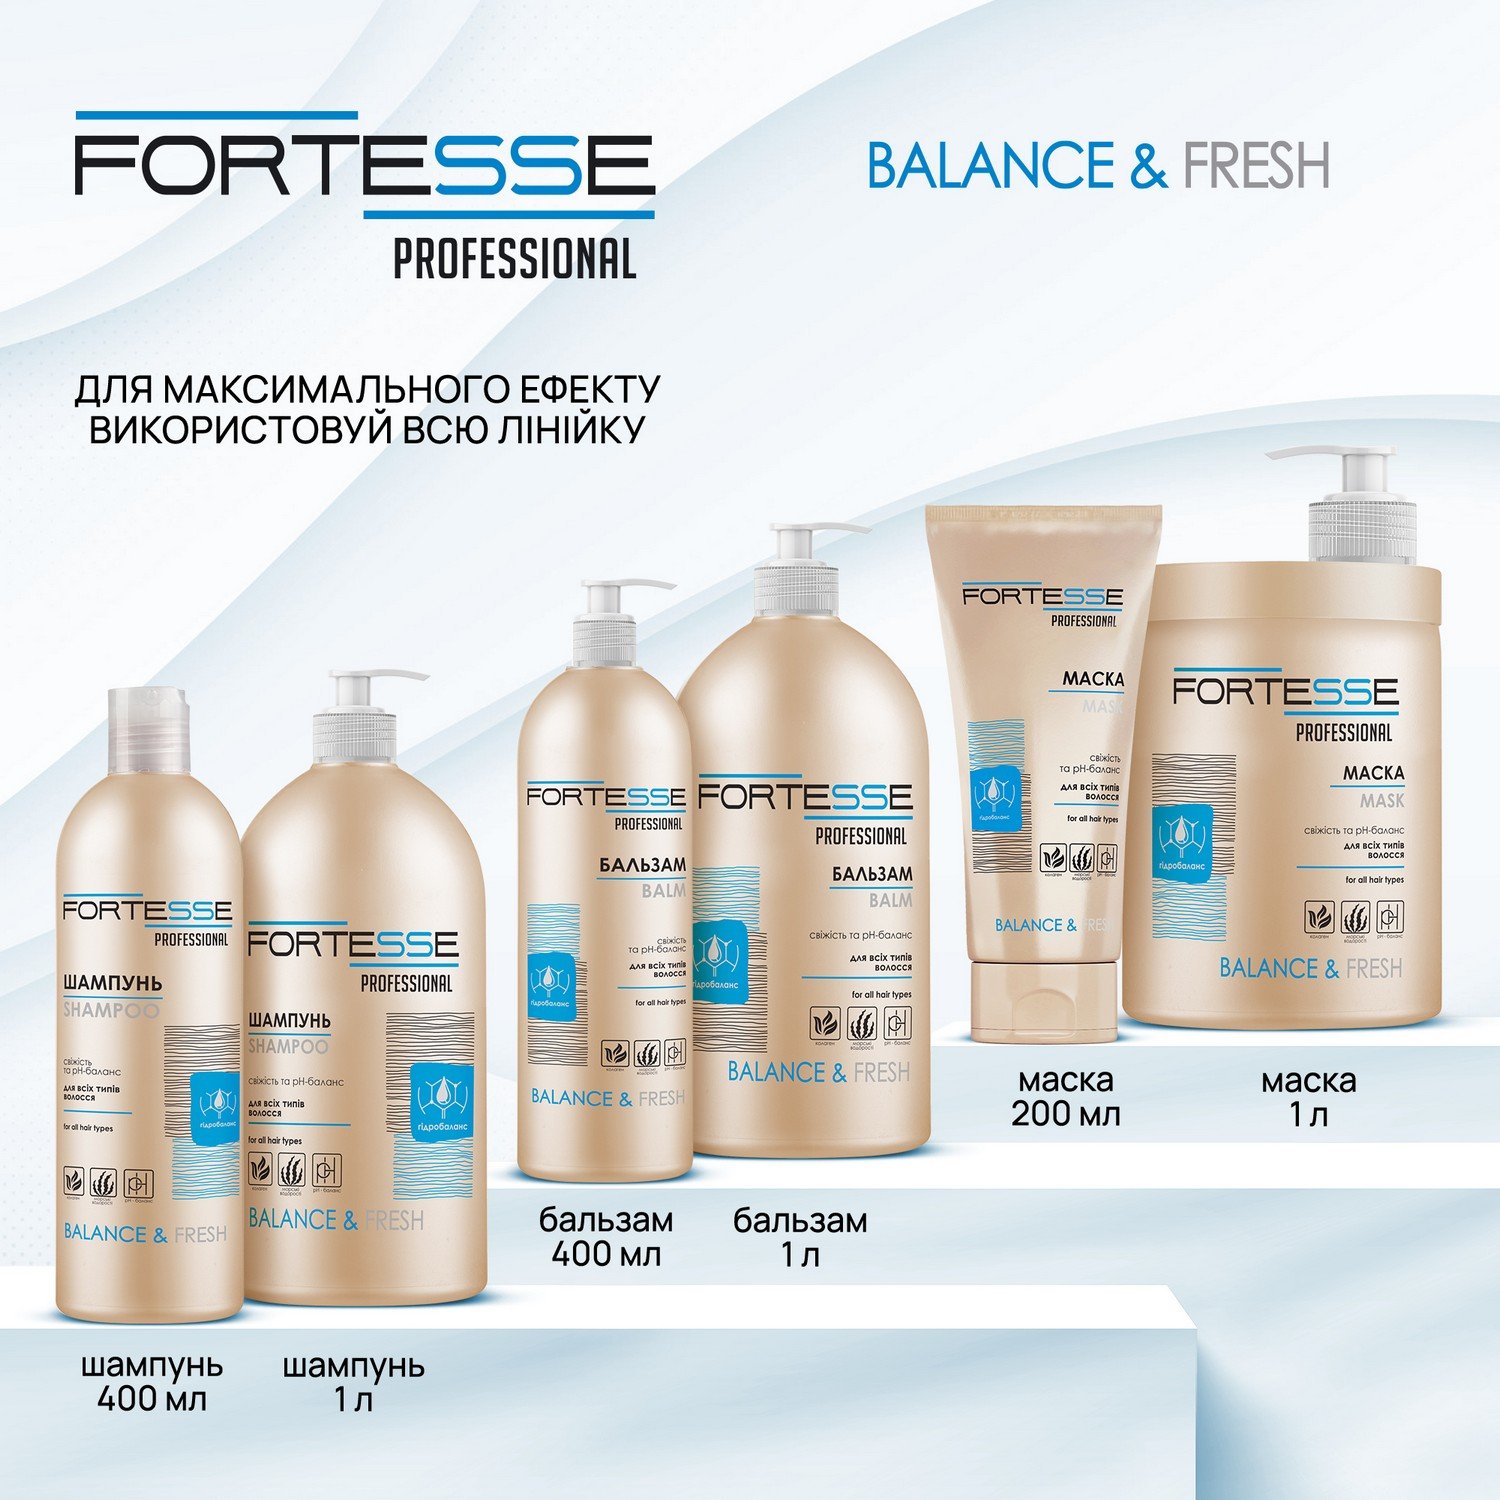 Маска Fortesse Professional Balance & Fresh, для всех типов волос, 200 мл - фото 5